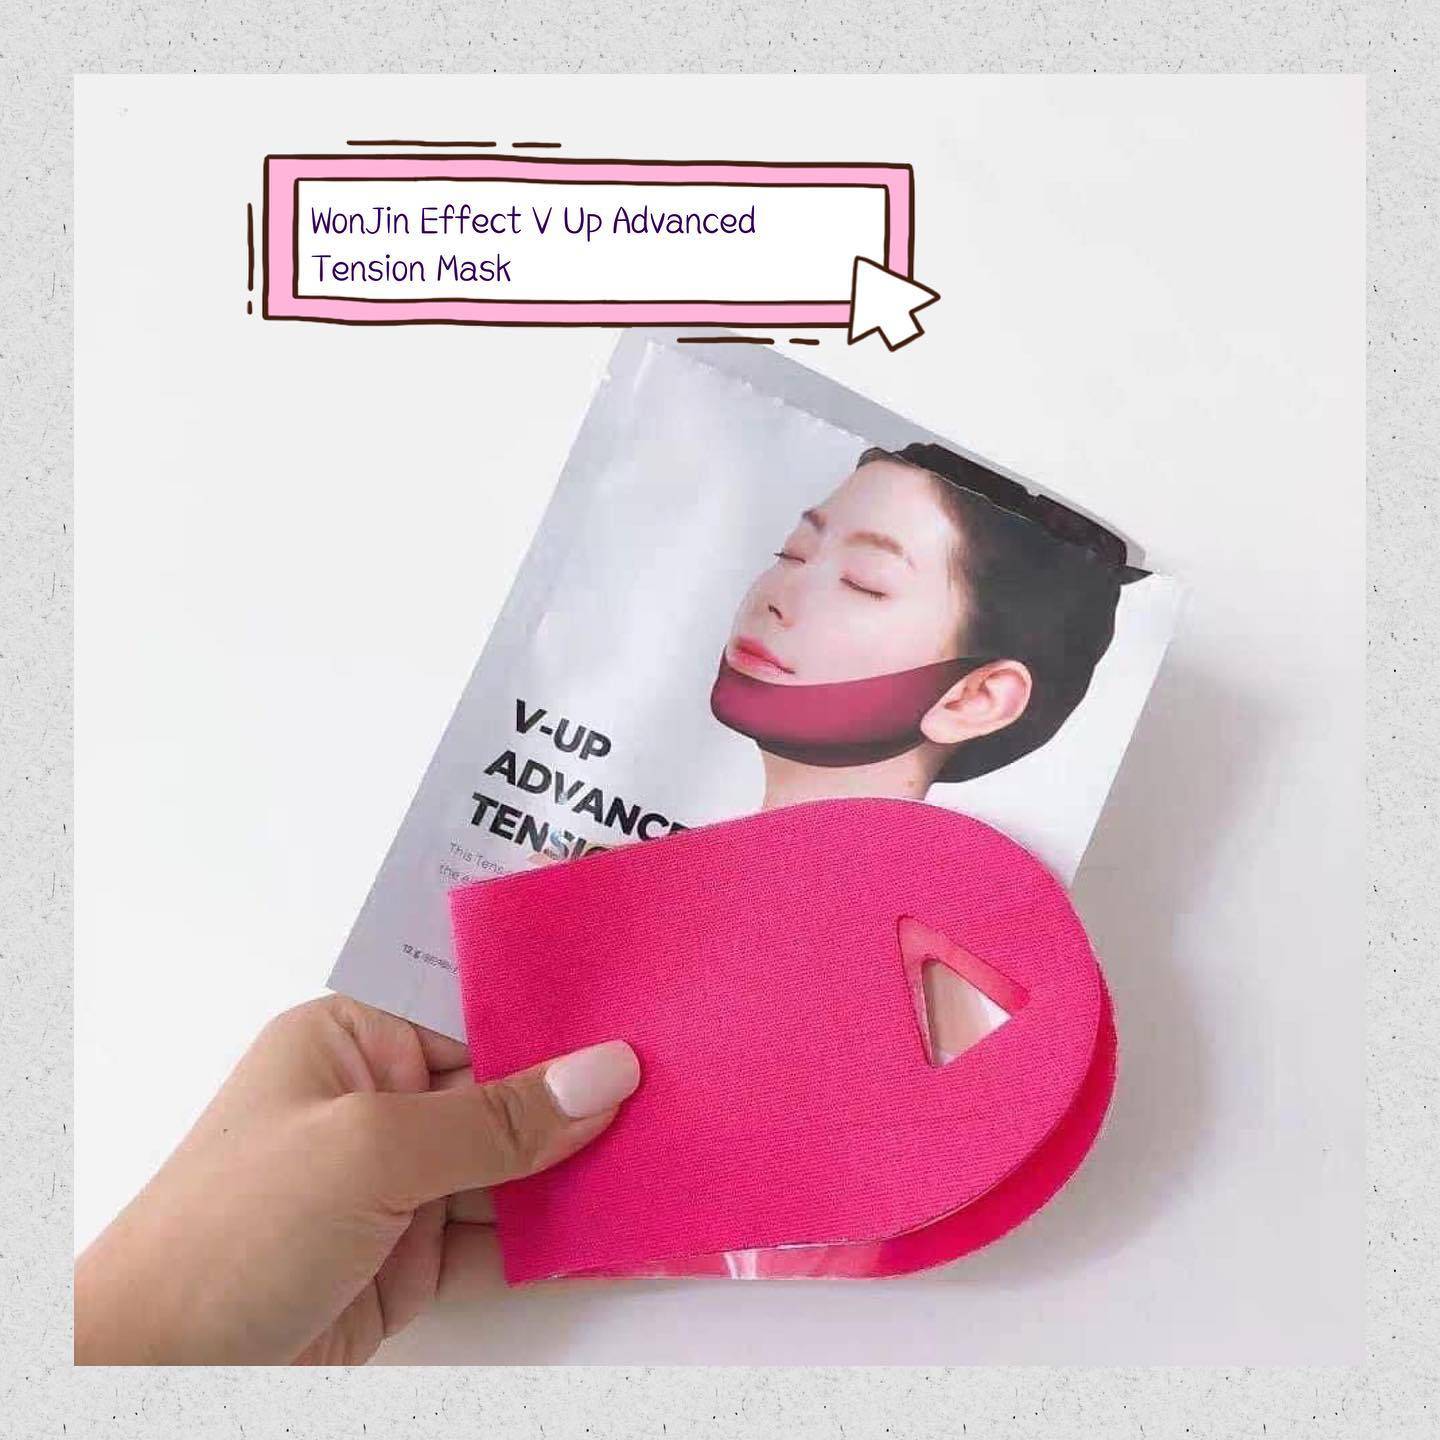 V-UP advanced tension mask από την Wonjin